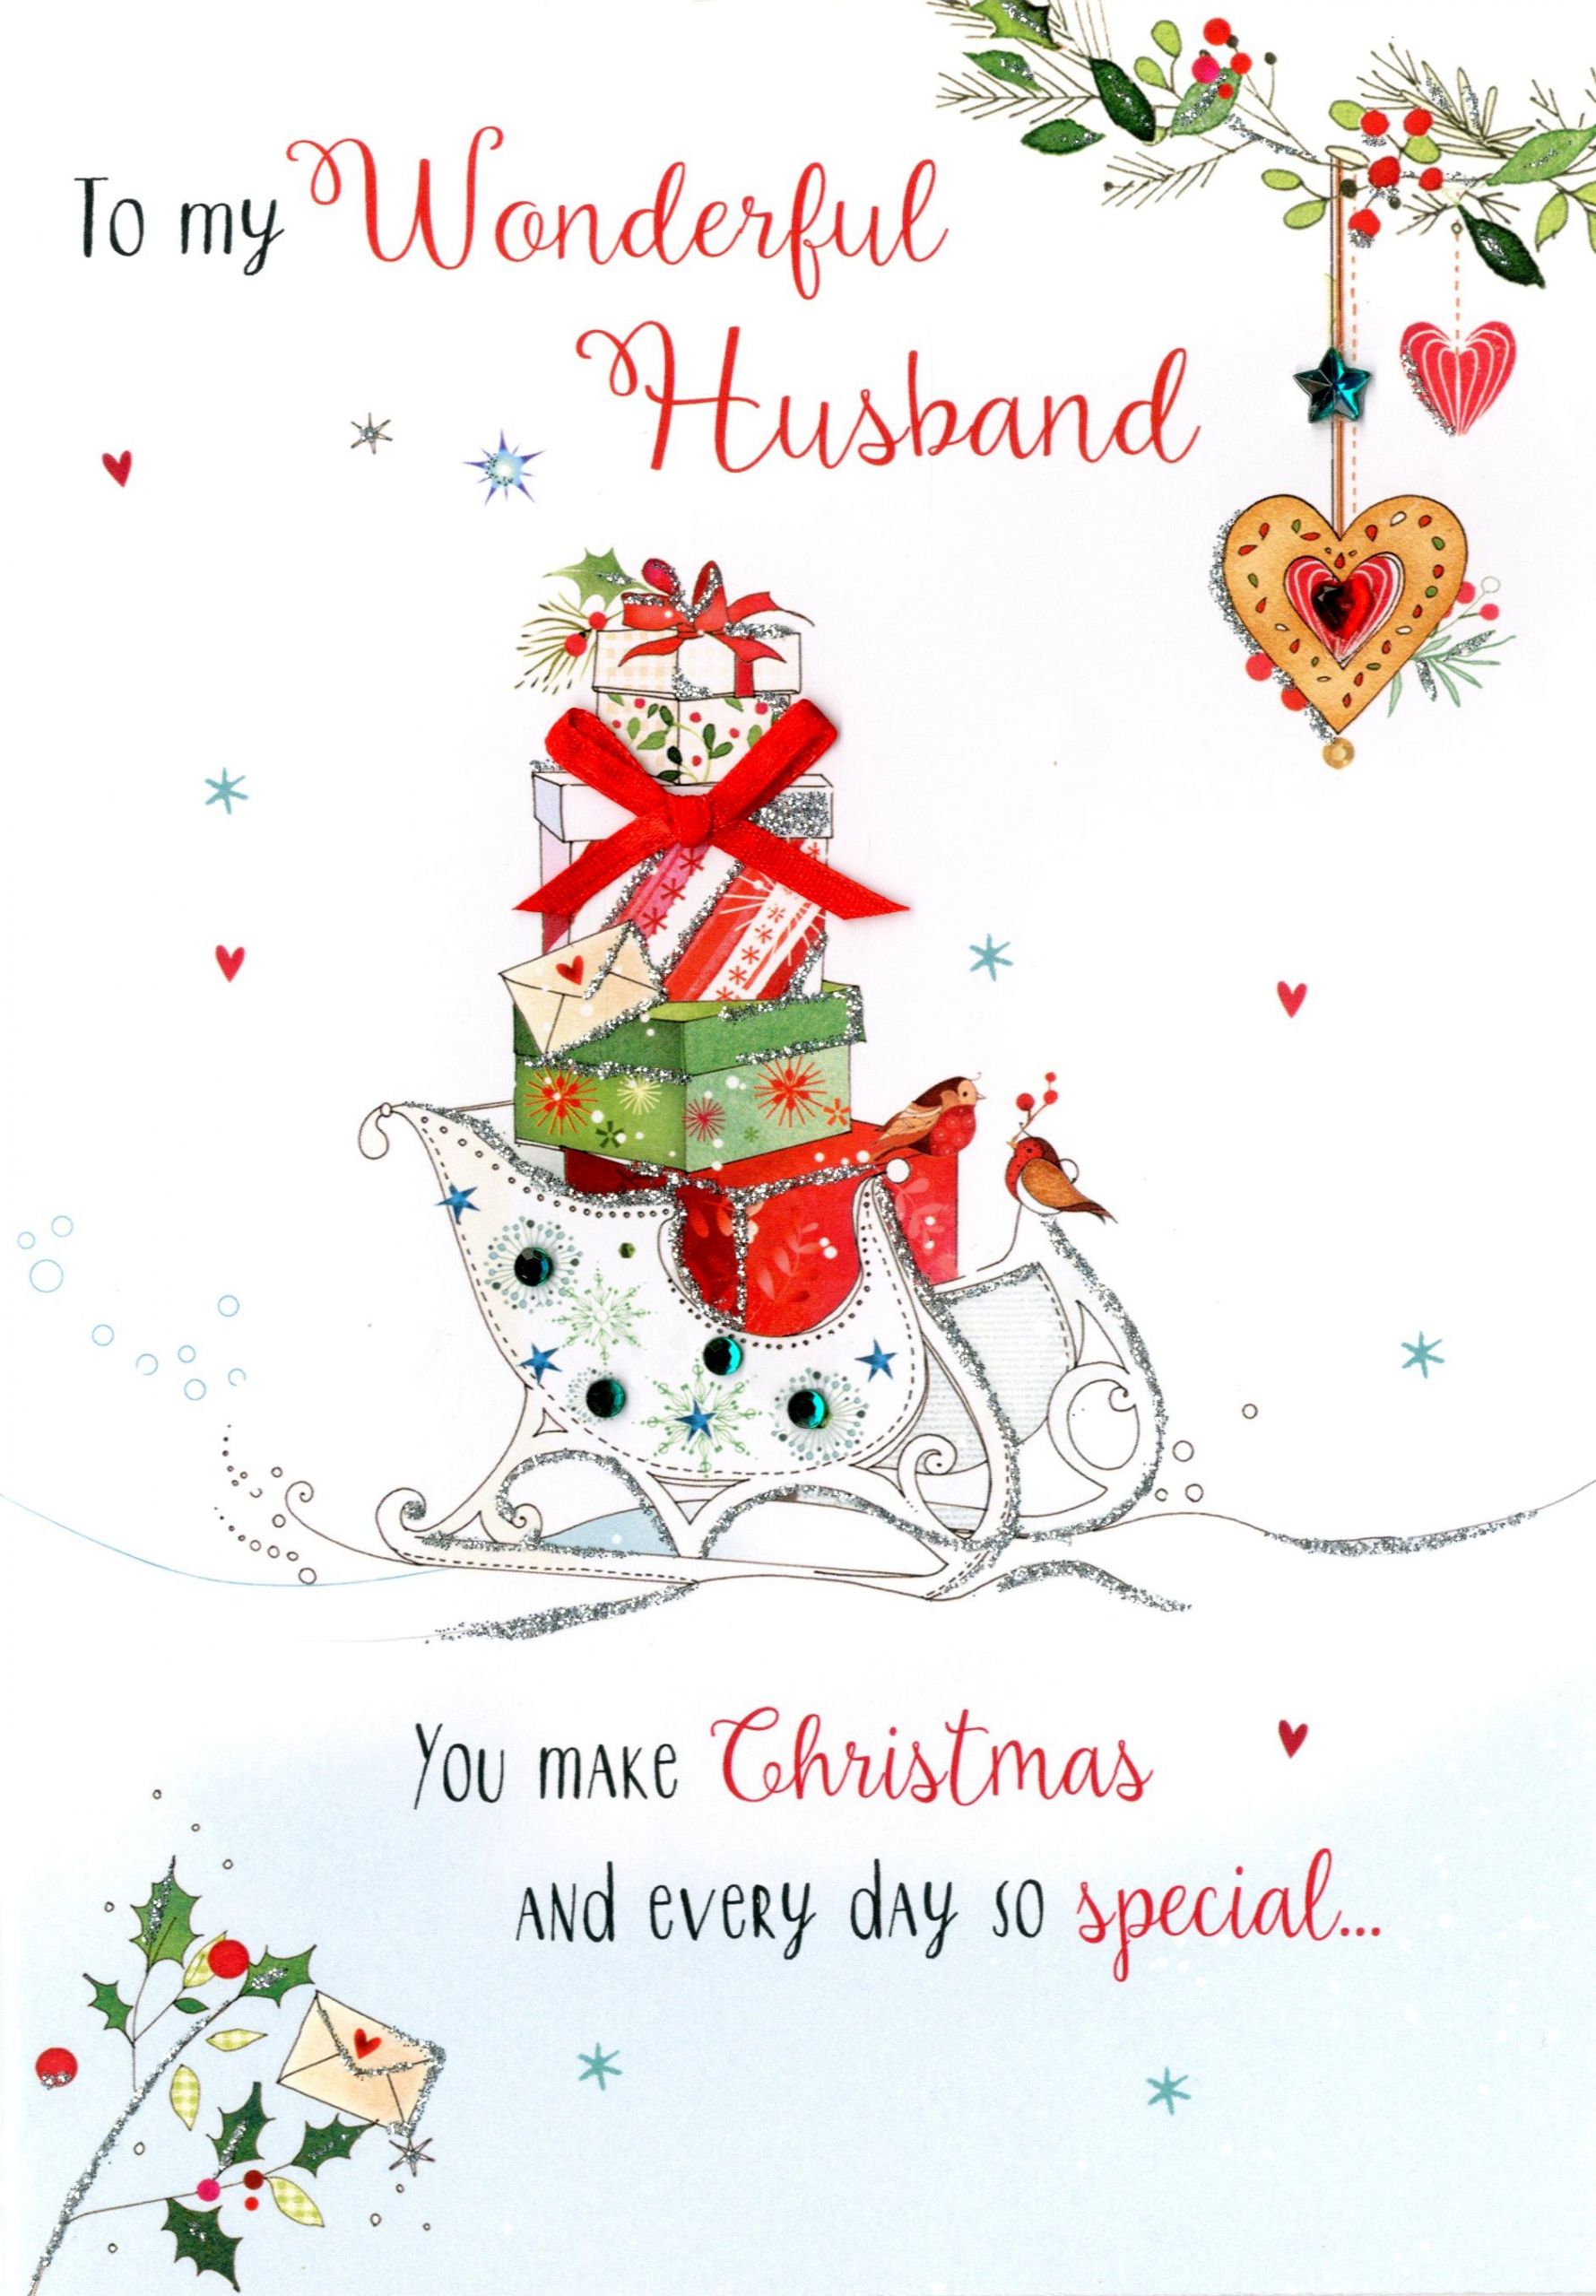 Christmas Quotes For Husbands
 Wonderful Husband Embellished Christmas Card